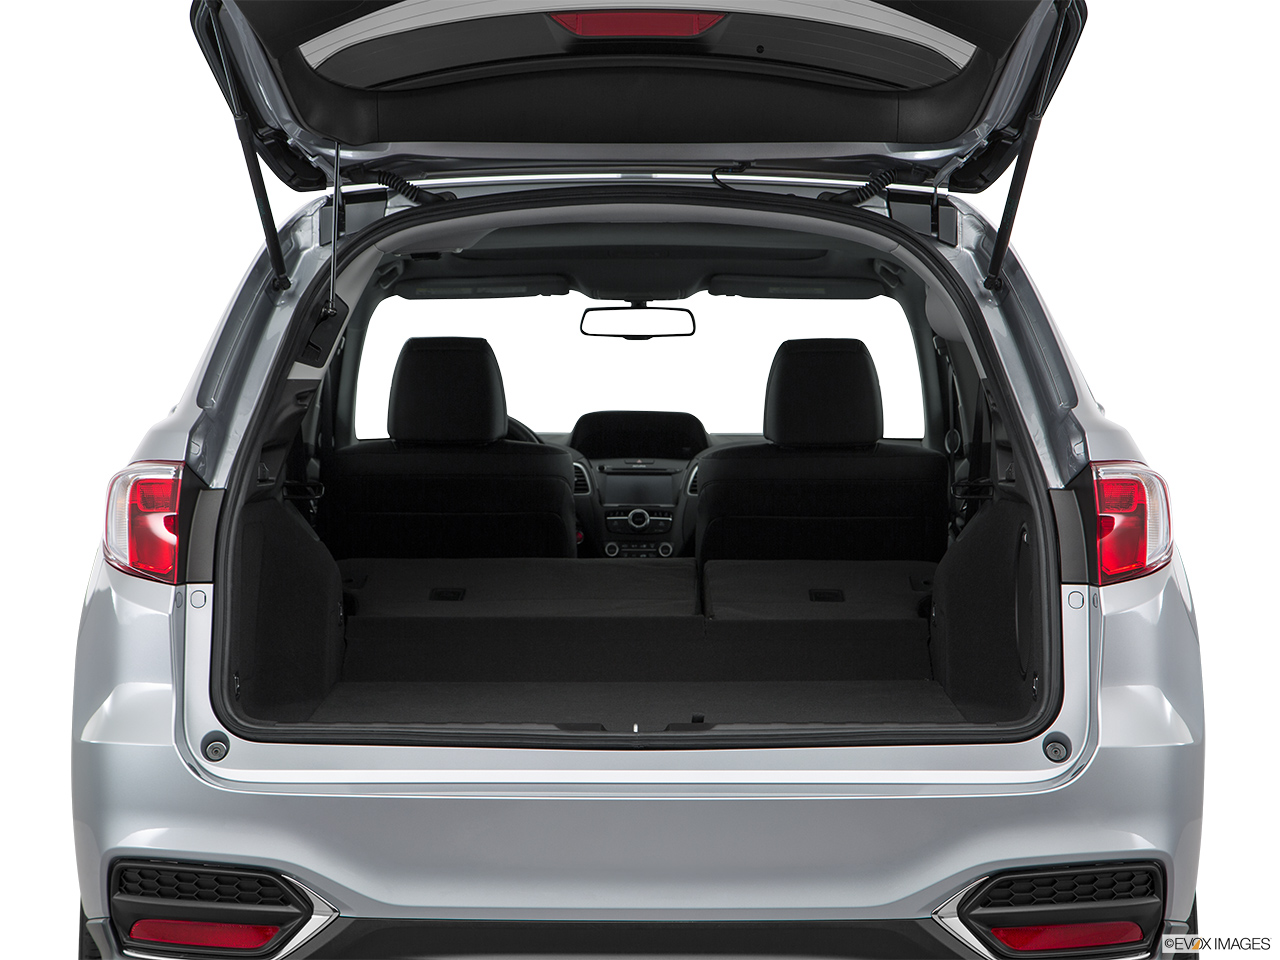 2017 Acura RDX AWD Hatchback & SUV rear angle. 